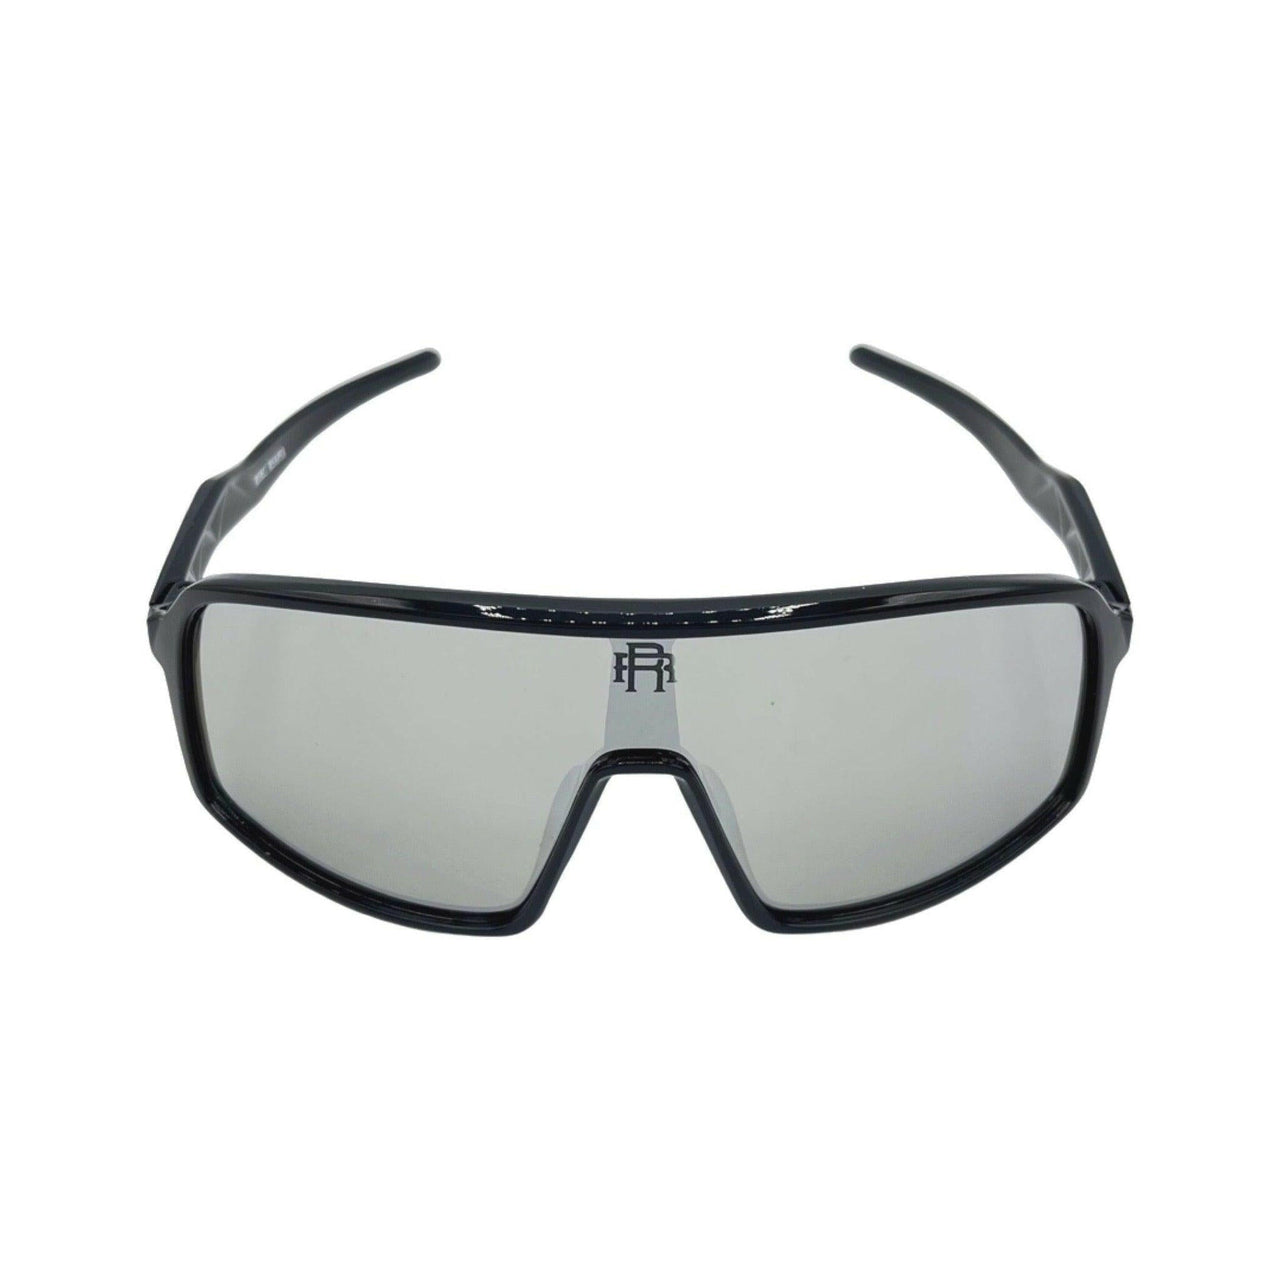 Yeti Silver Mirrored Polarized Lens Sunglasses - Rebel Reaper Clothing Company Sunglasses